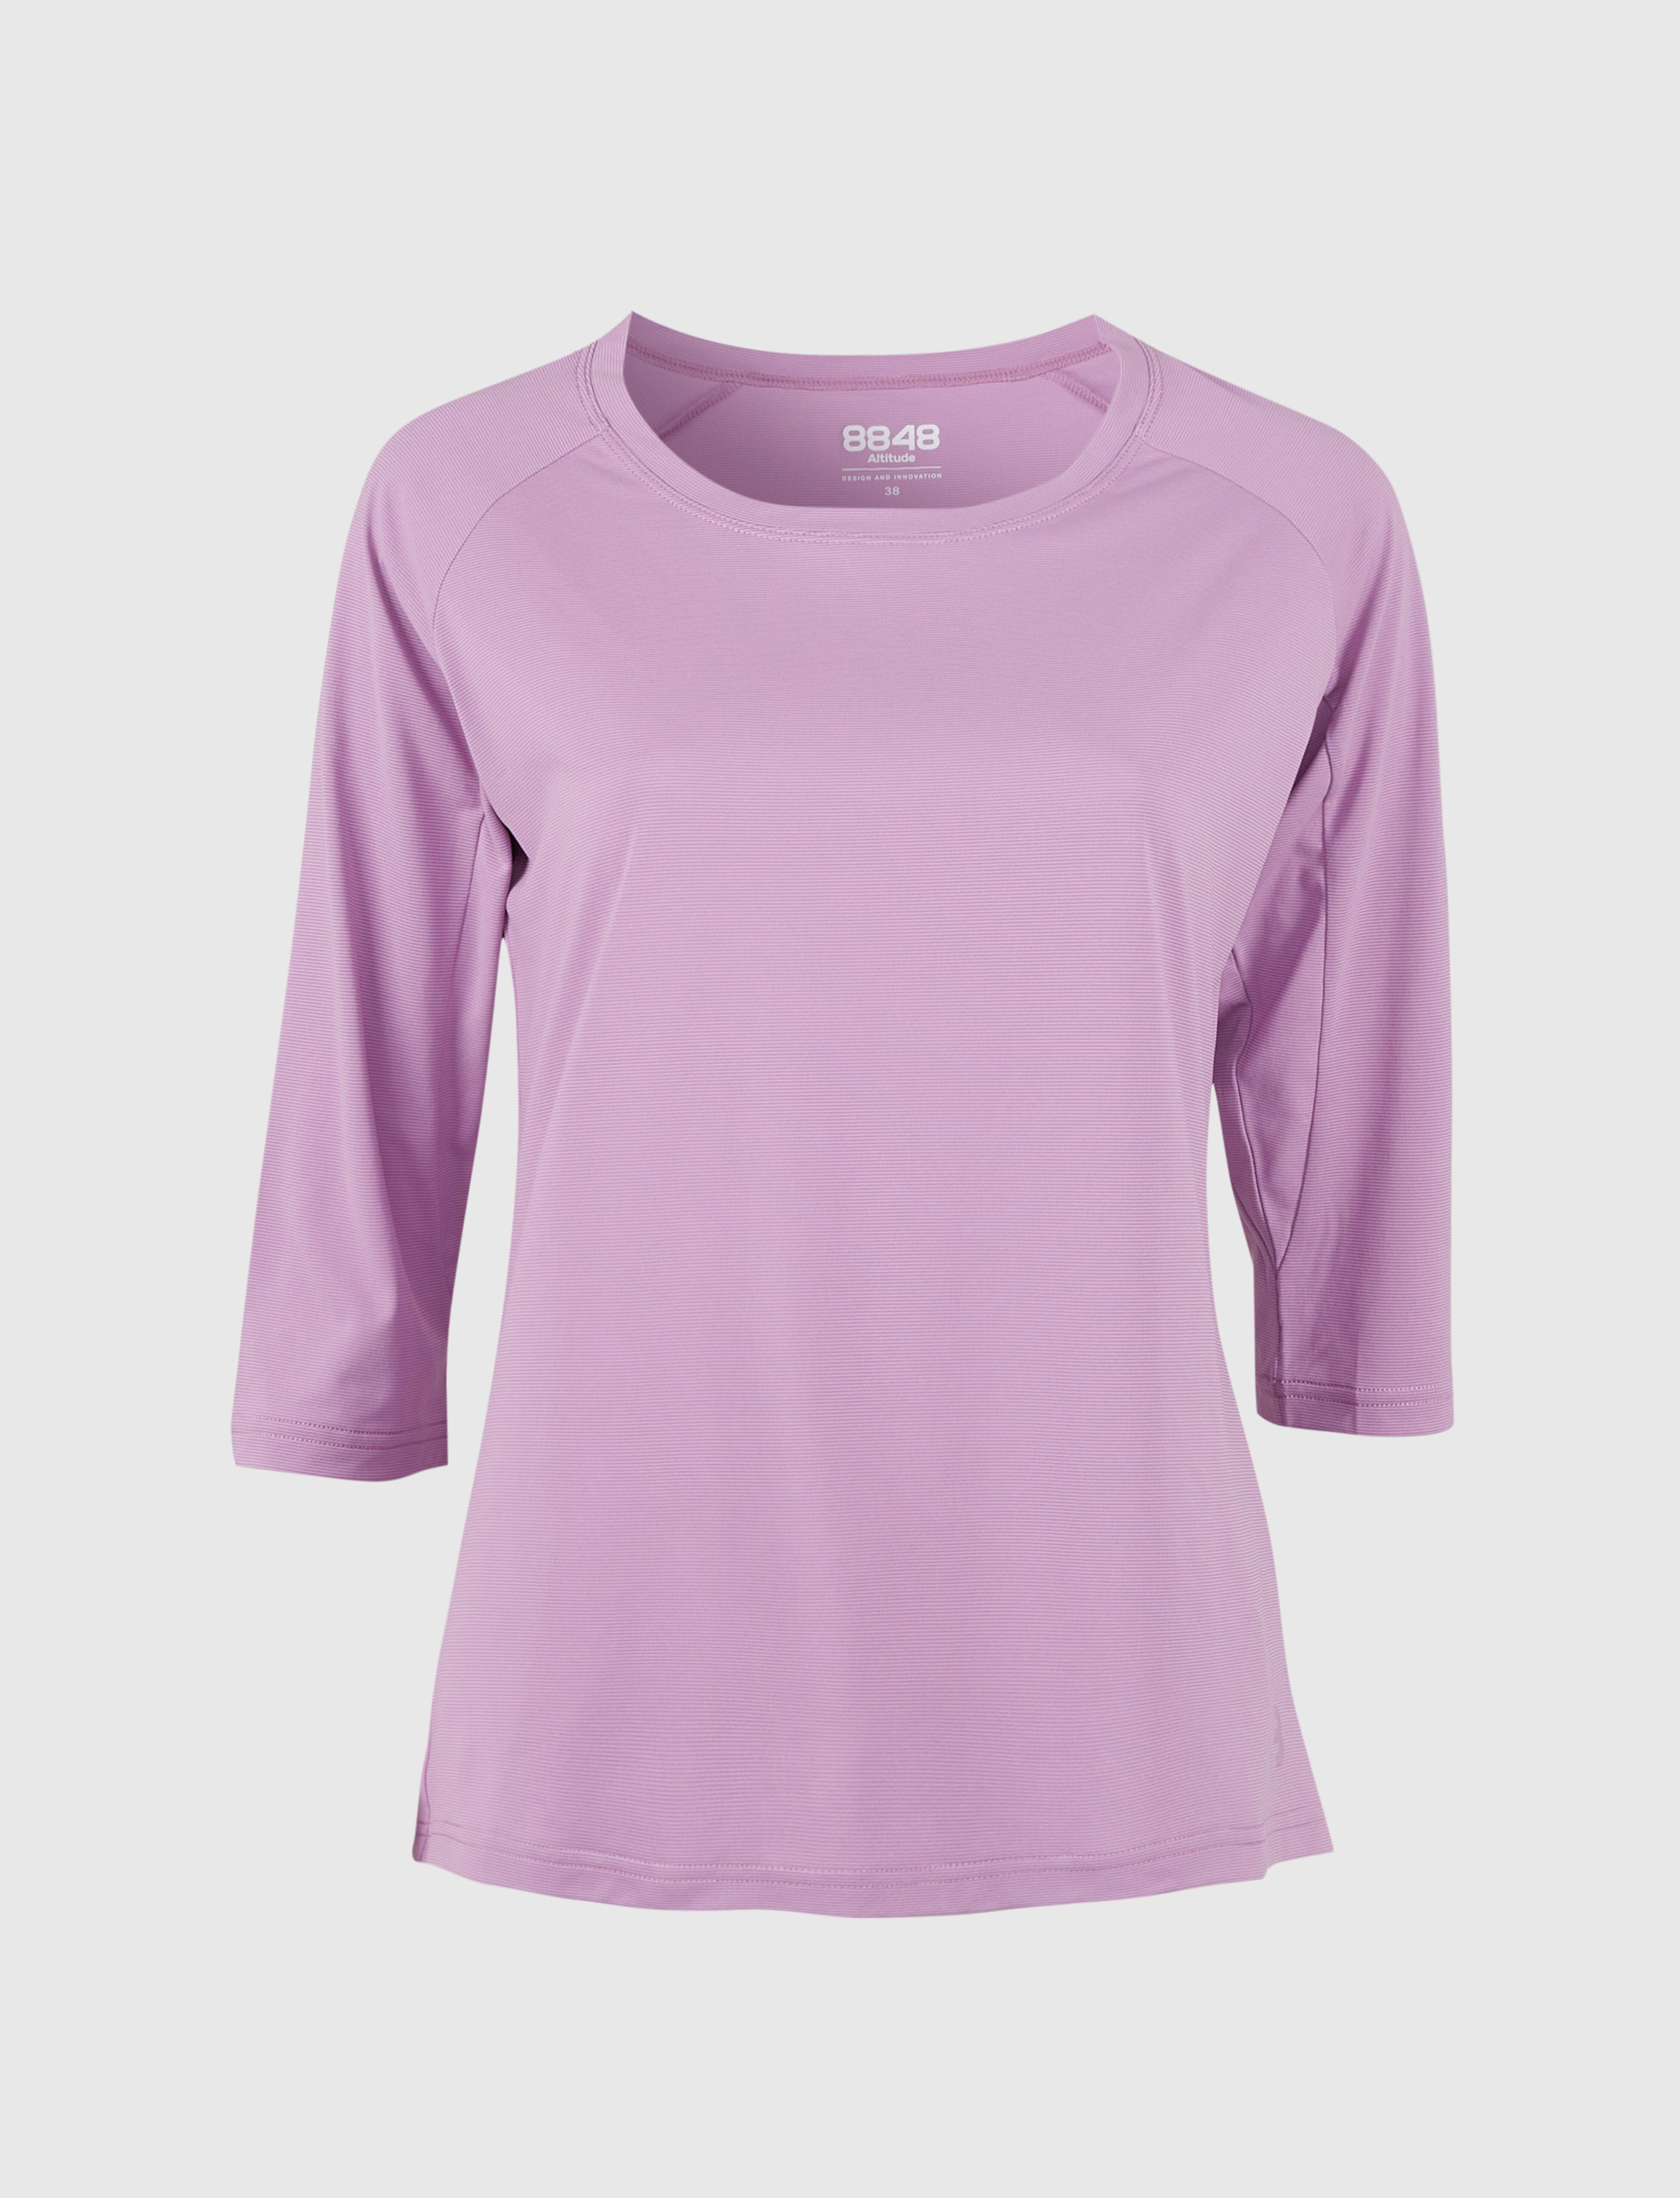 Dandilon W Tee Lilac - Purple long sleeve T-shirt women